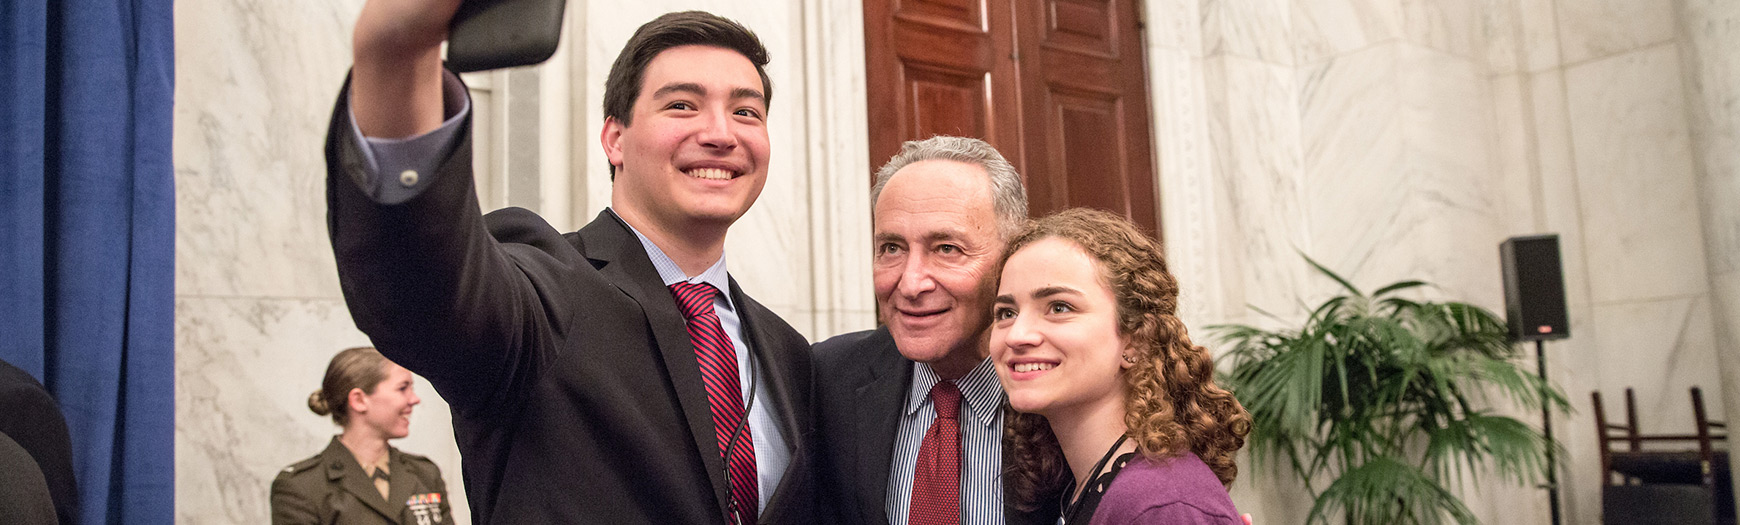 Senator Chuck Schumer (D-NY) takes a selfie with New York delegates at the USSYP Senate reception, Washington, DC